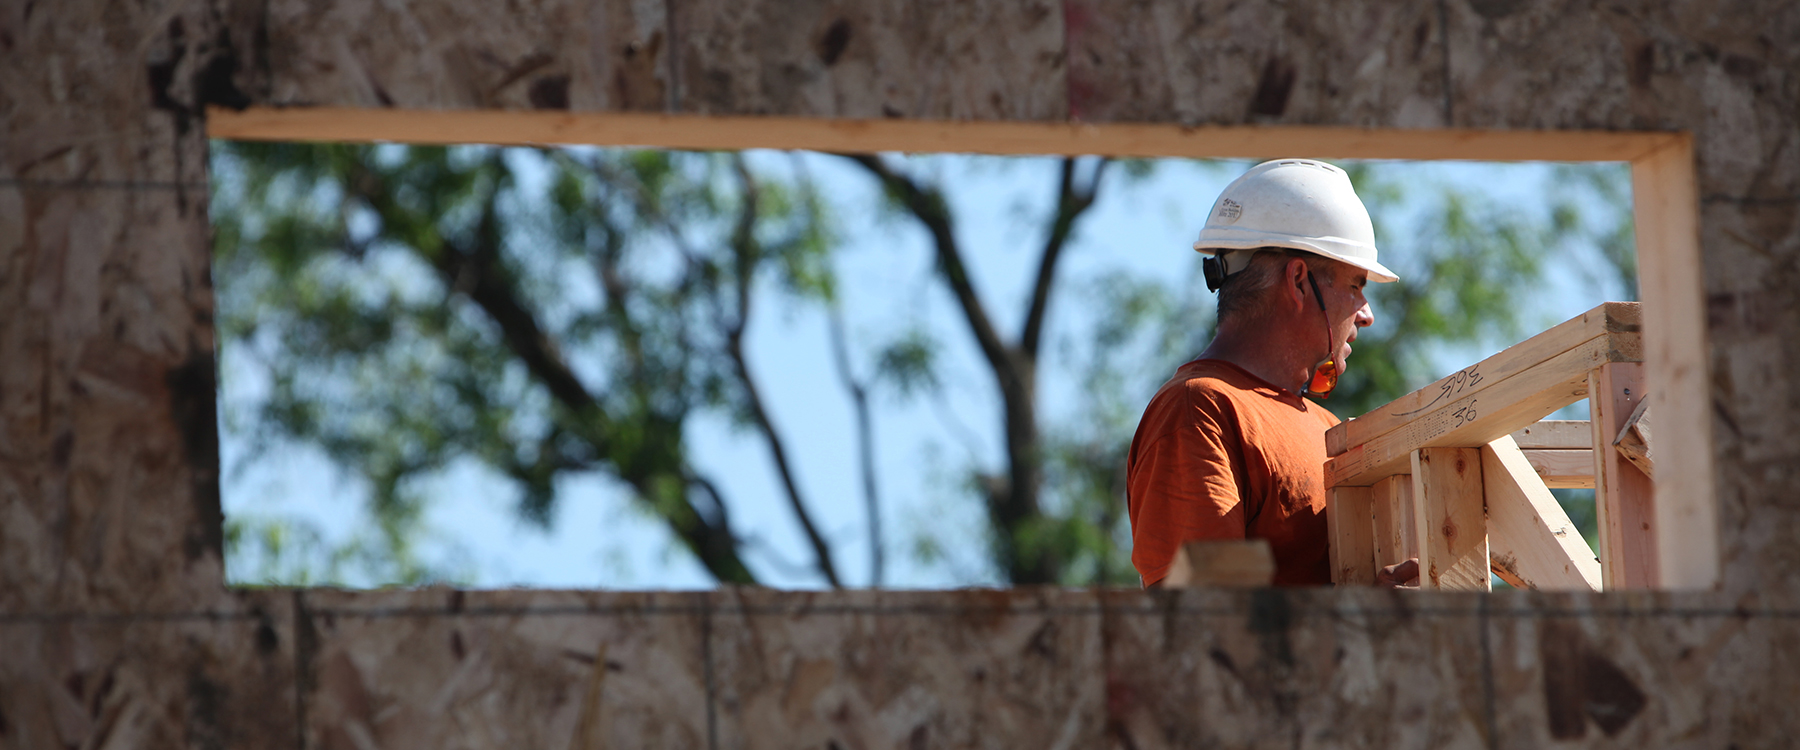 Construction volunteer through window